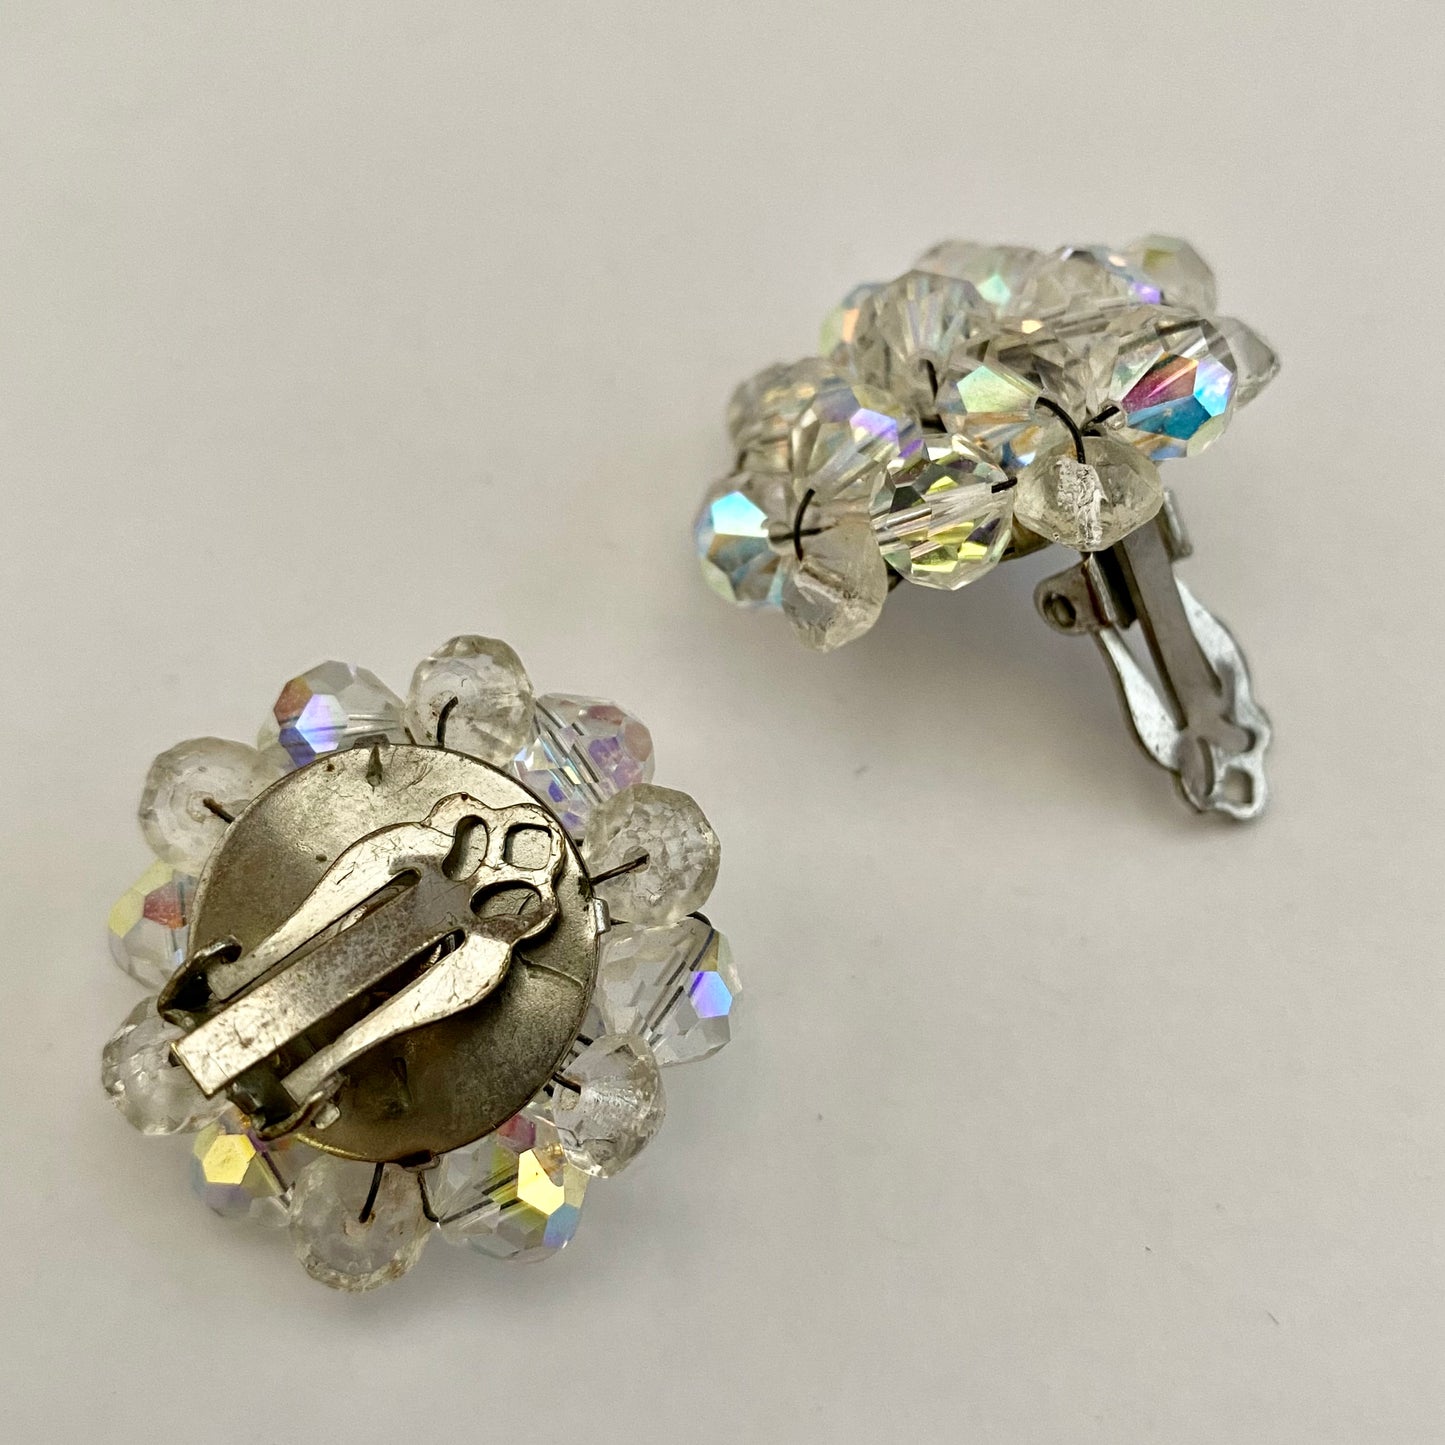 1960s Aurora Borealis Crystal Bead Earrings